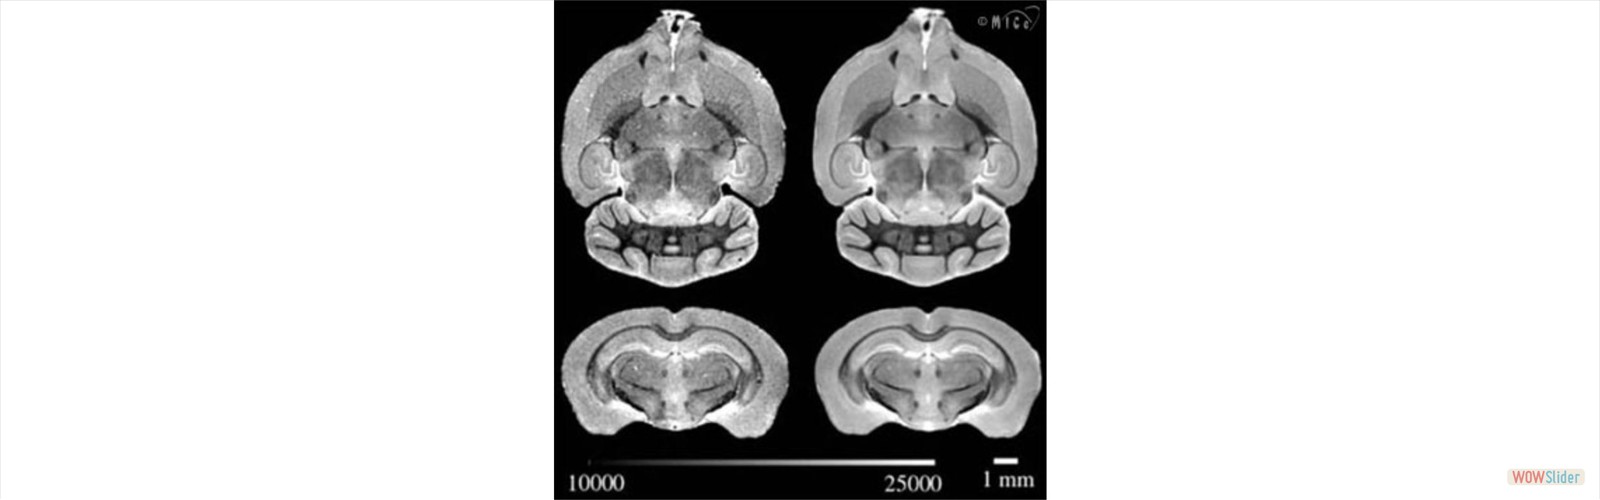 Mouse Brain MRI